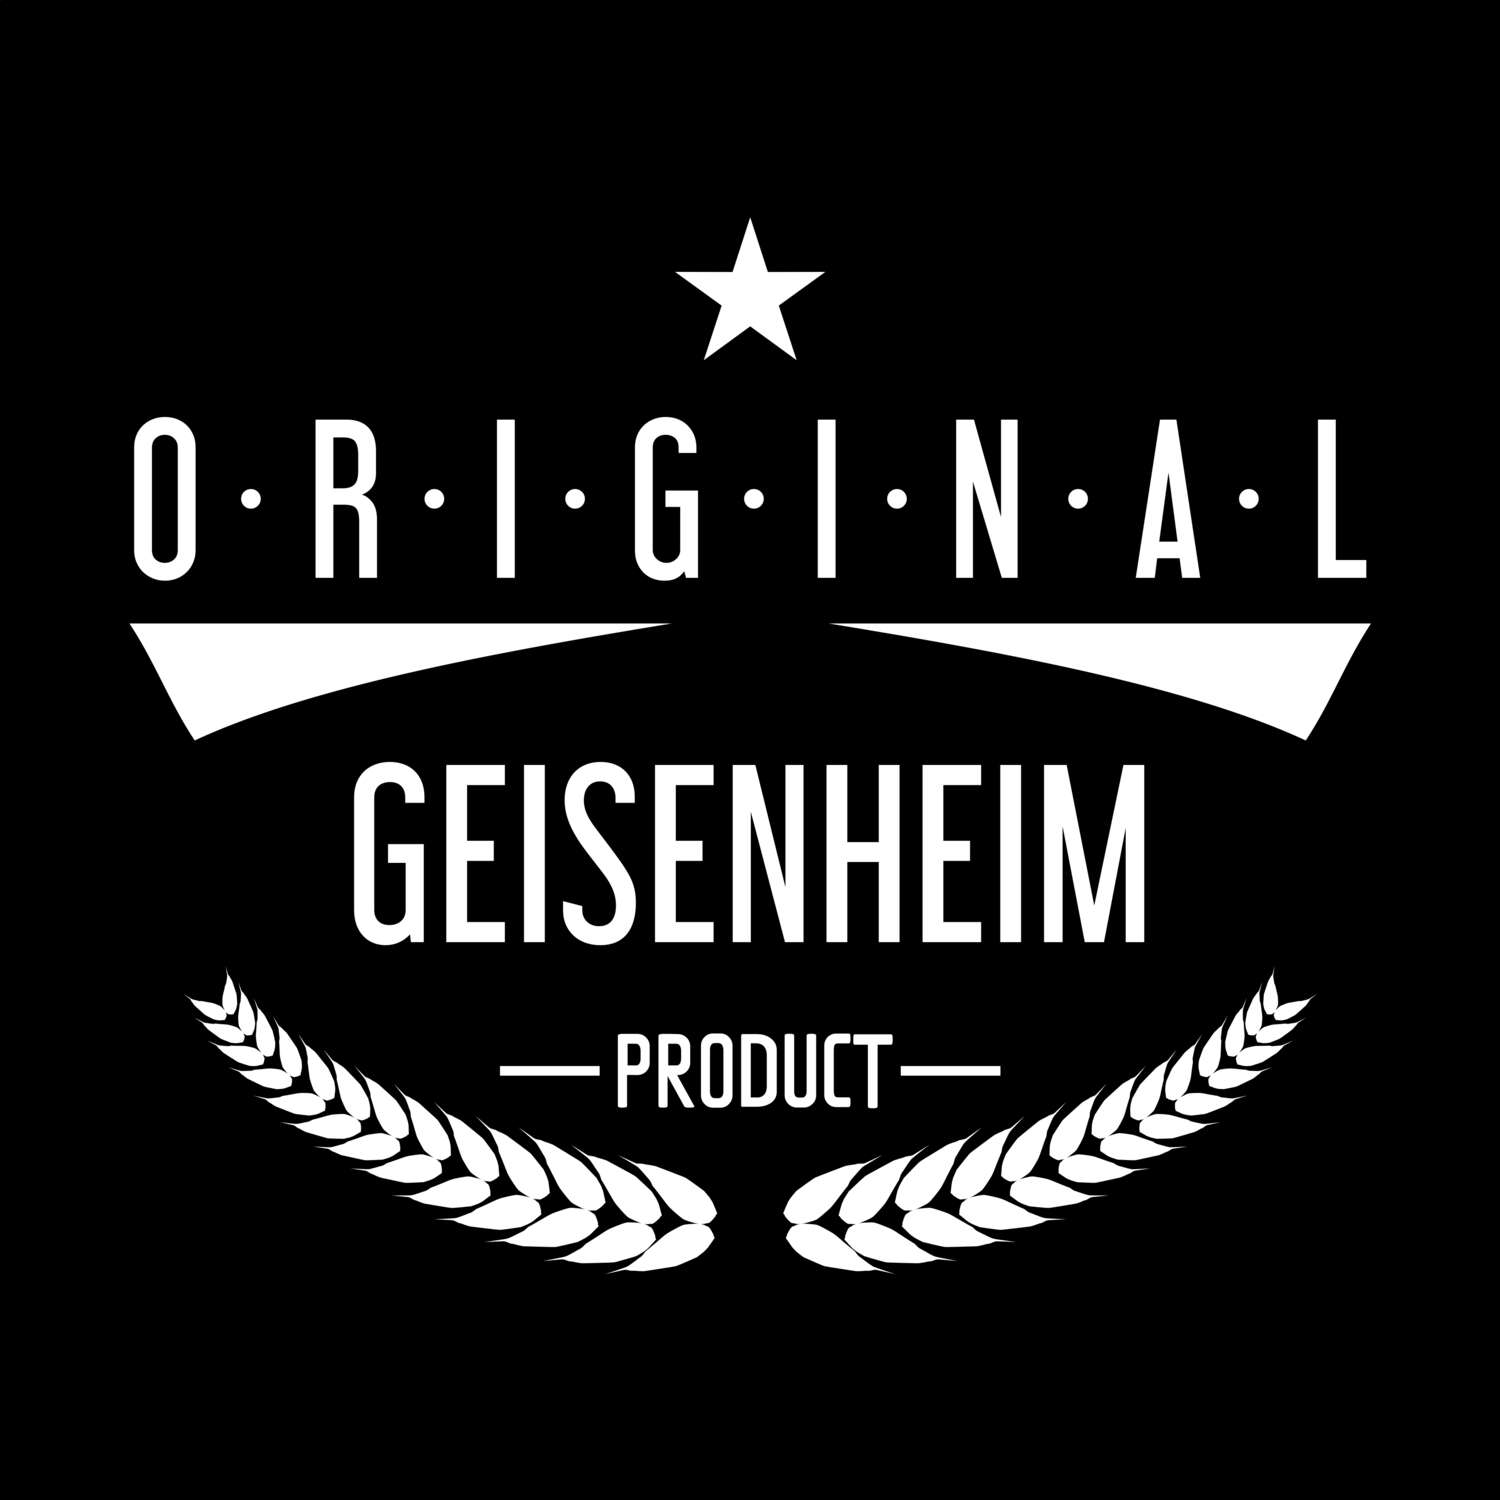 Geisenheim T-Shirt »Original Product«